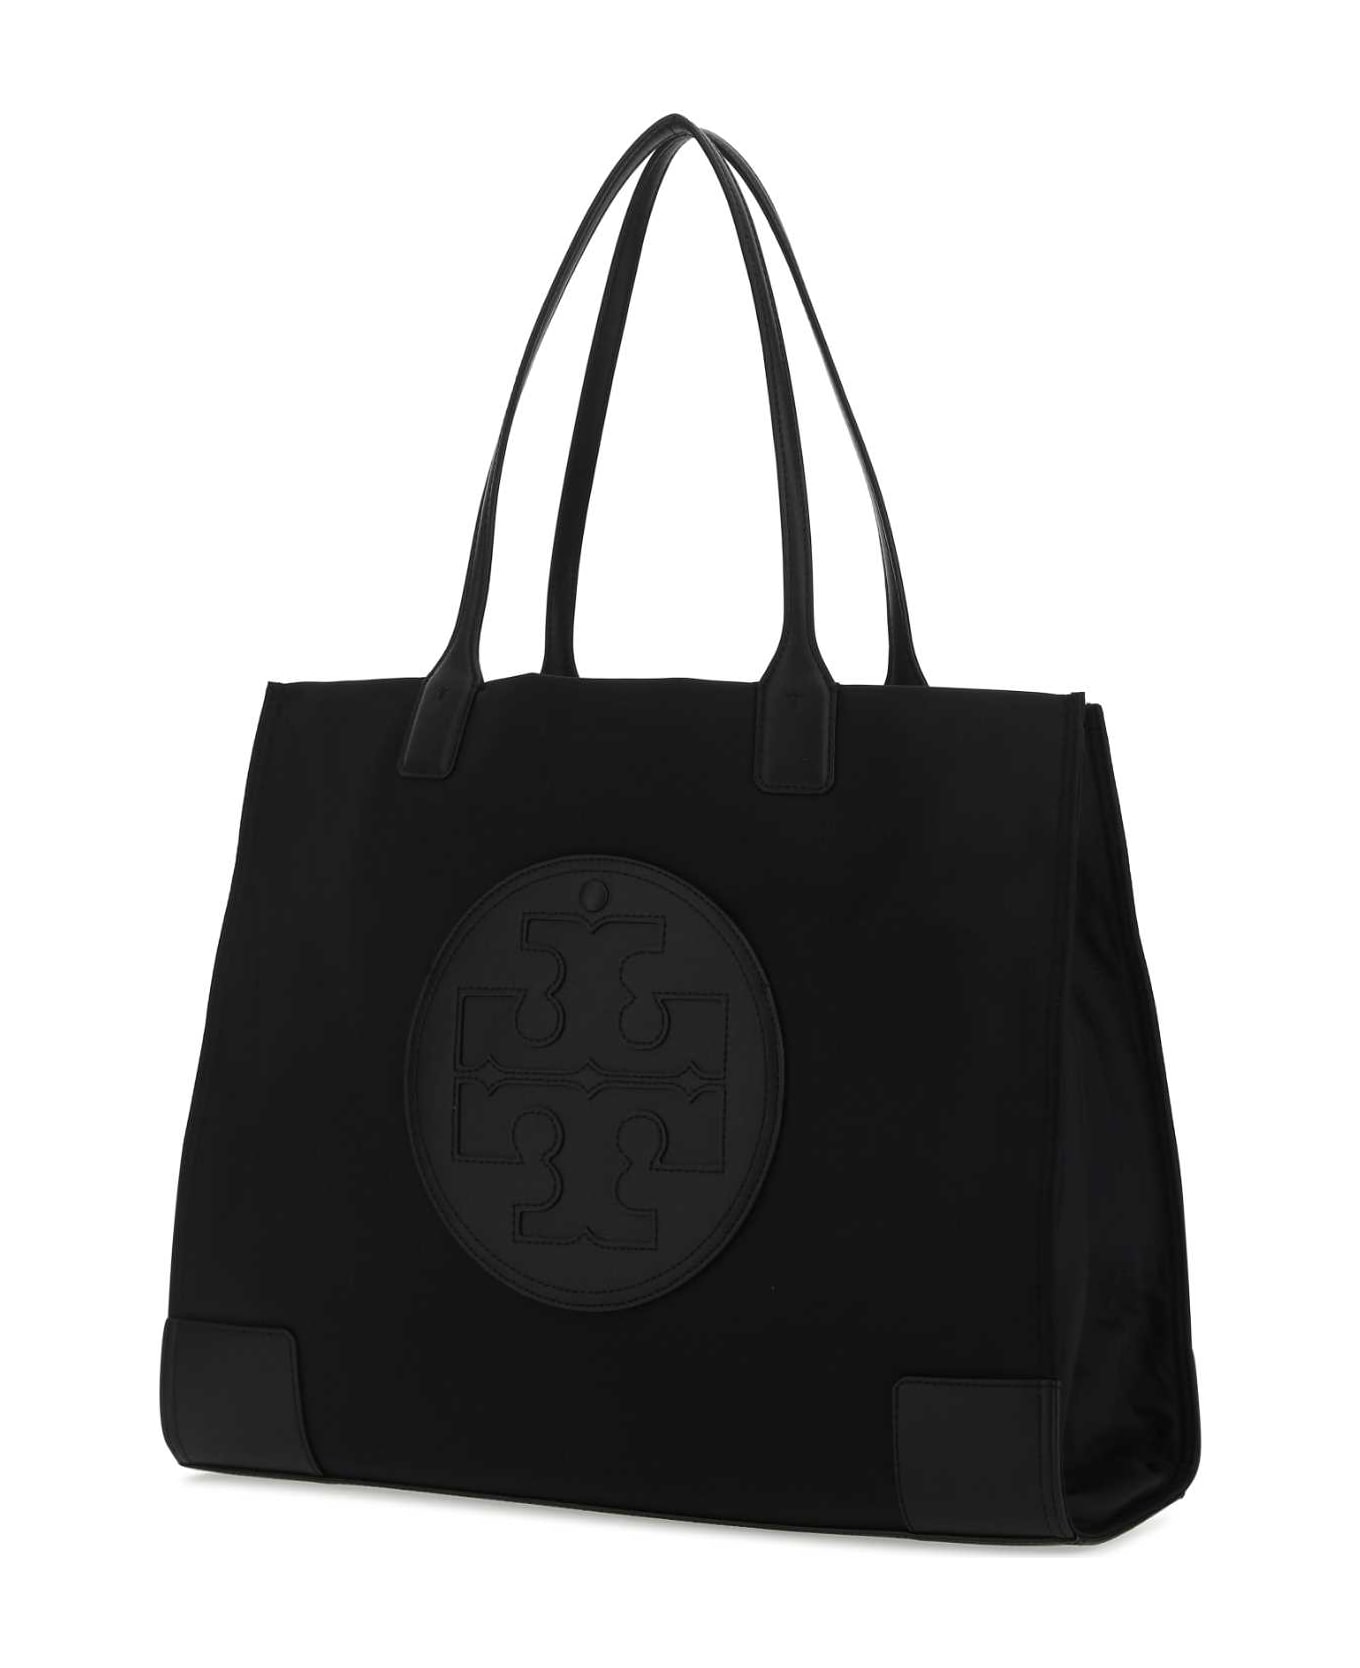 Tory Burch Black Nylon Ella Shopping Bag - 001